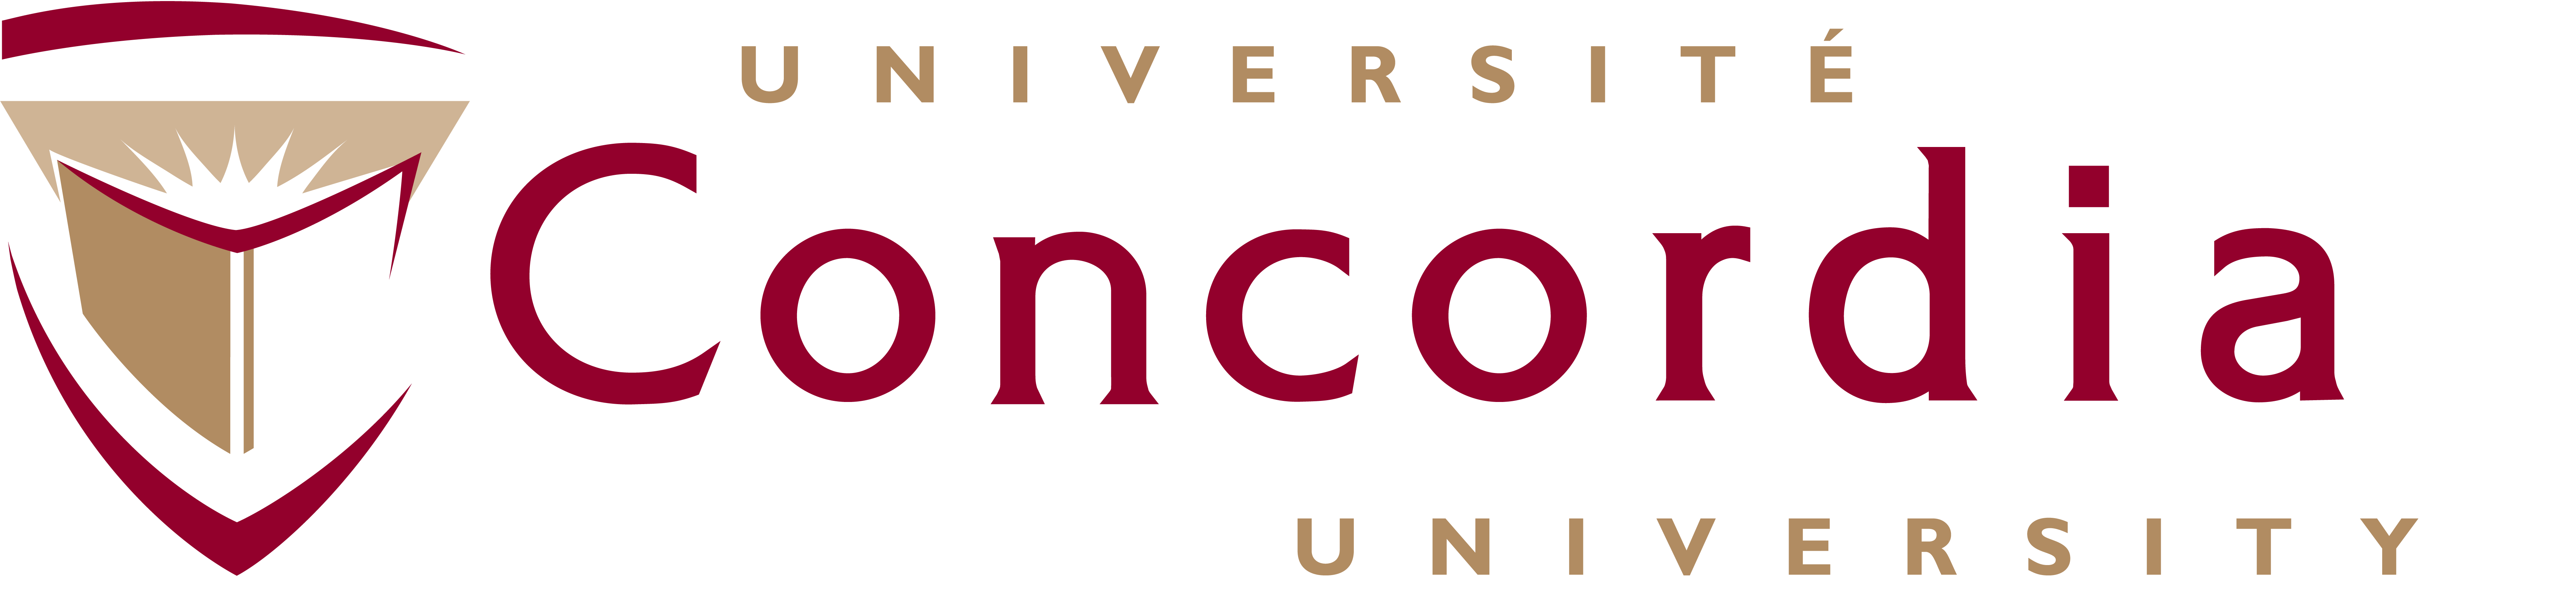 Universite de Concordia University logo